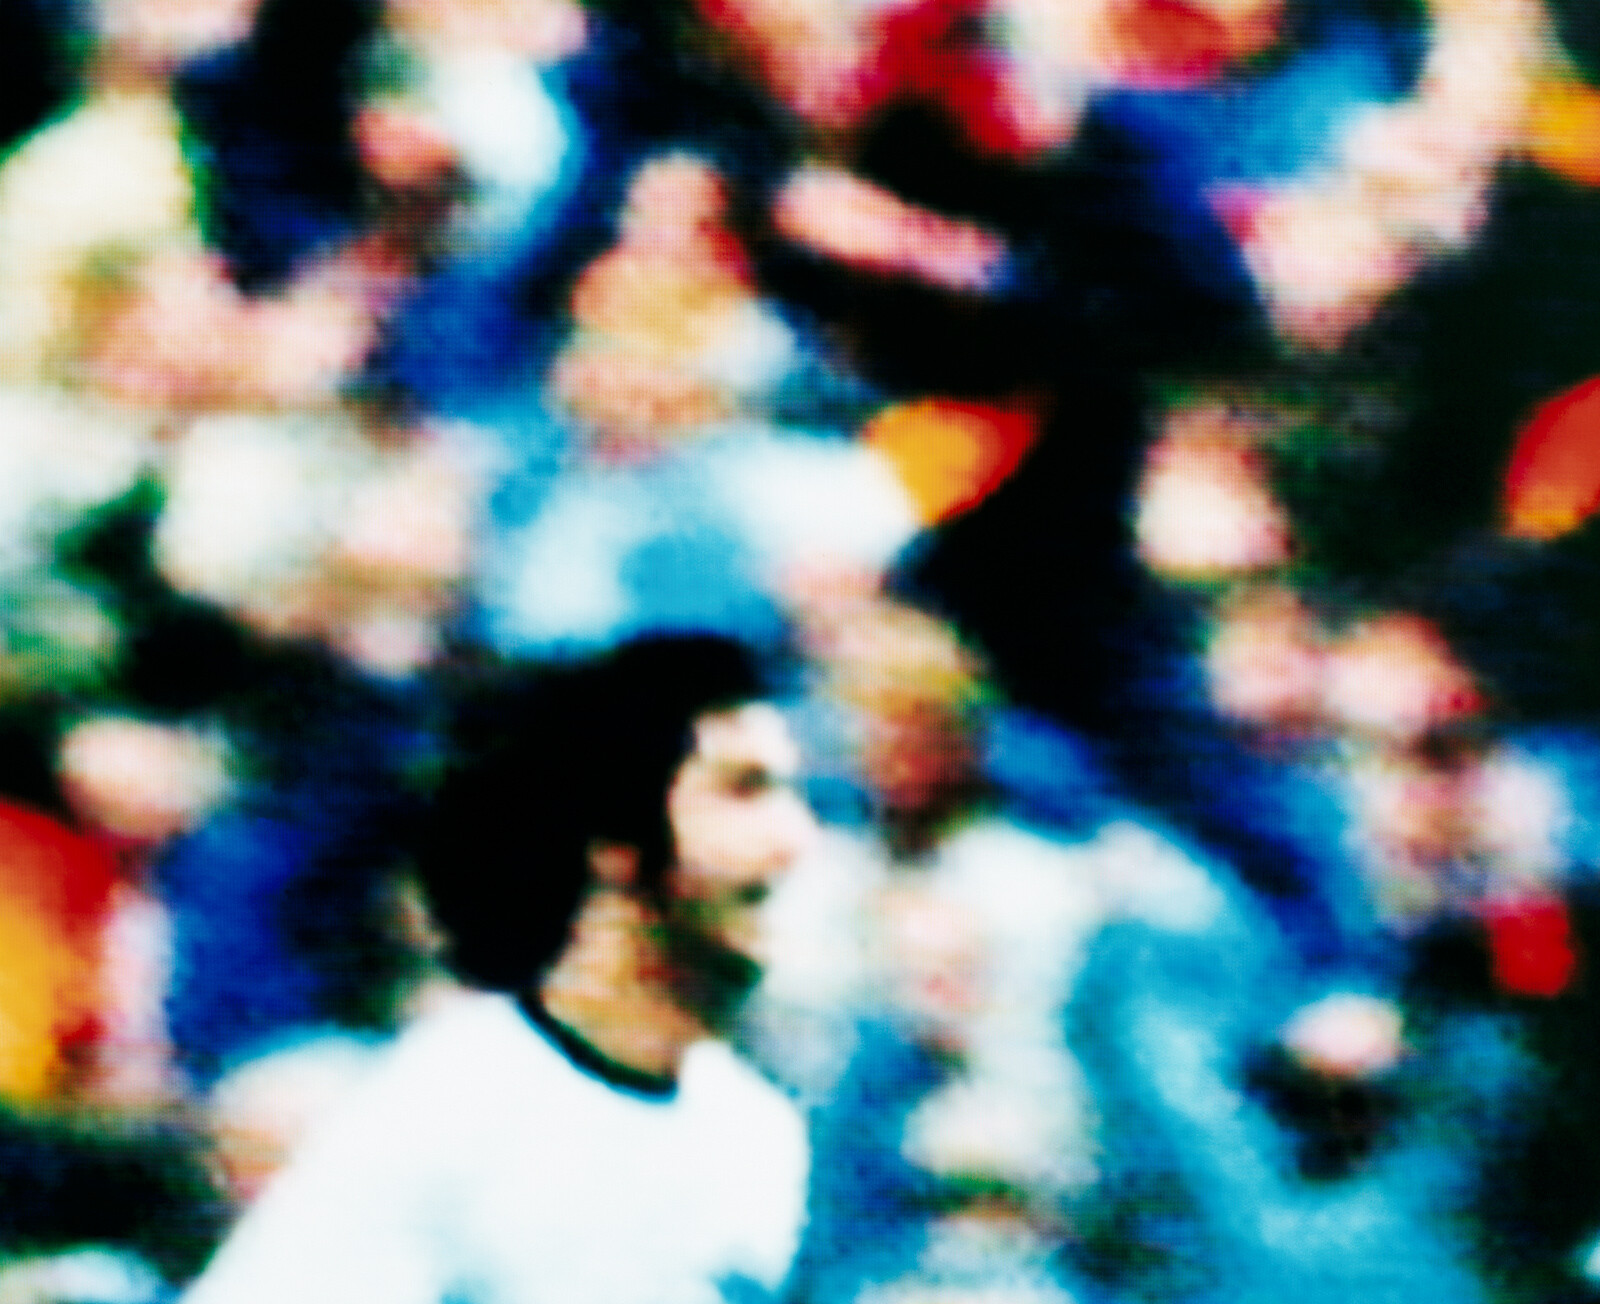 Gerd Muller West Germany v Holland 2-1 (Final), 07.07. 1974, Olympiastadion Munich, West Germany - Robert Davies